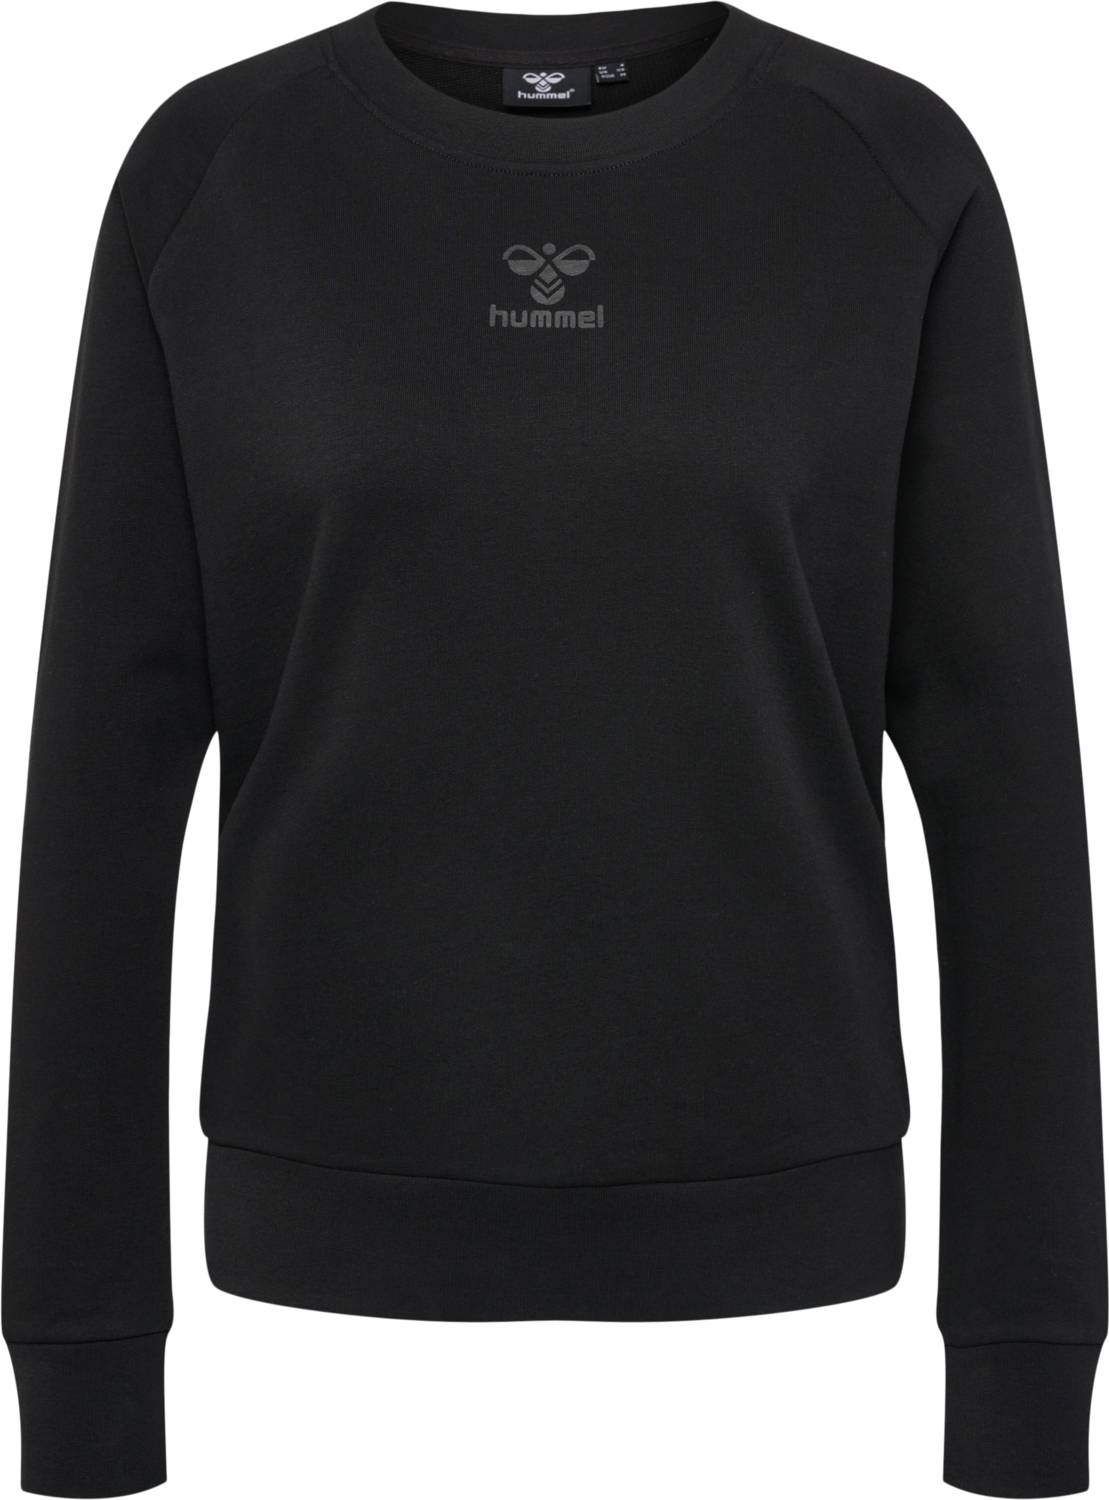 Hummel Women's hmlICONS Sweatshirt Black S, Black